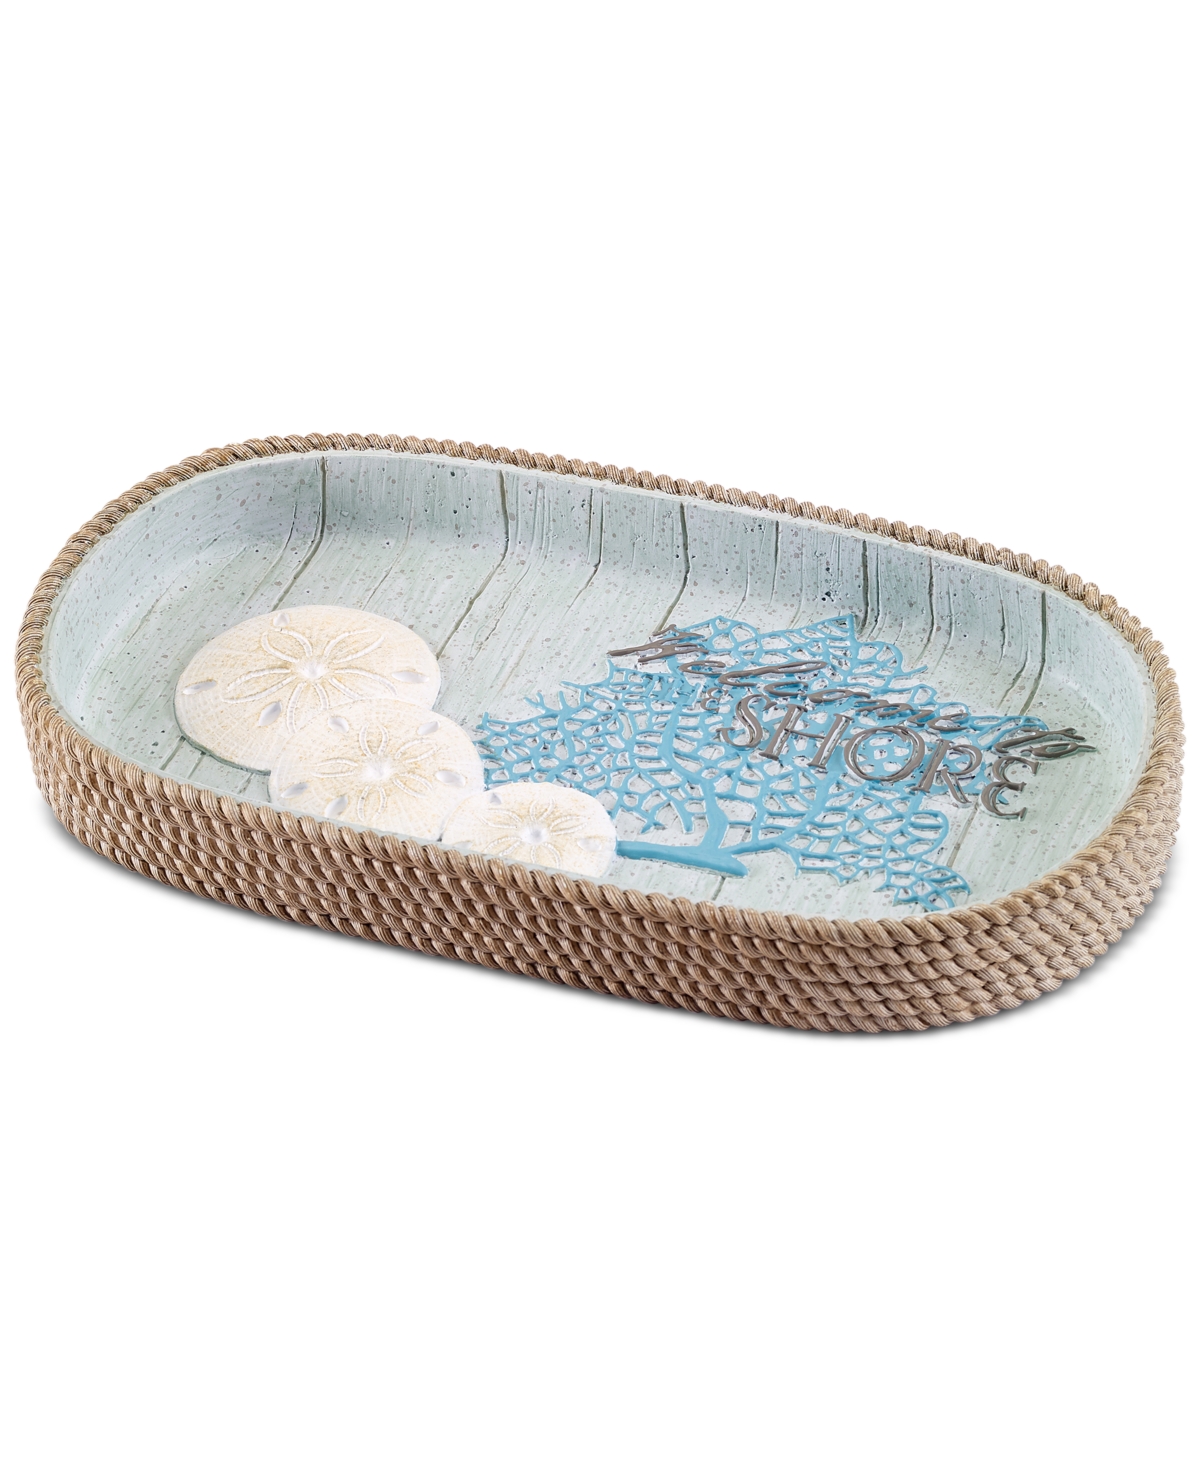 Beachcomber Seashells Resin Bathroom Tray - Seafoam